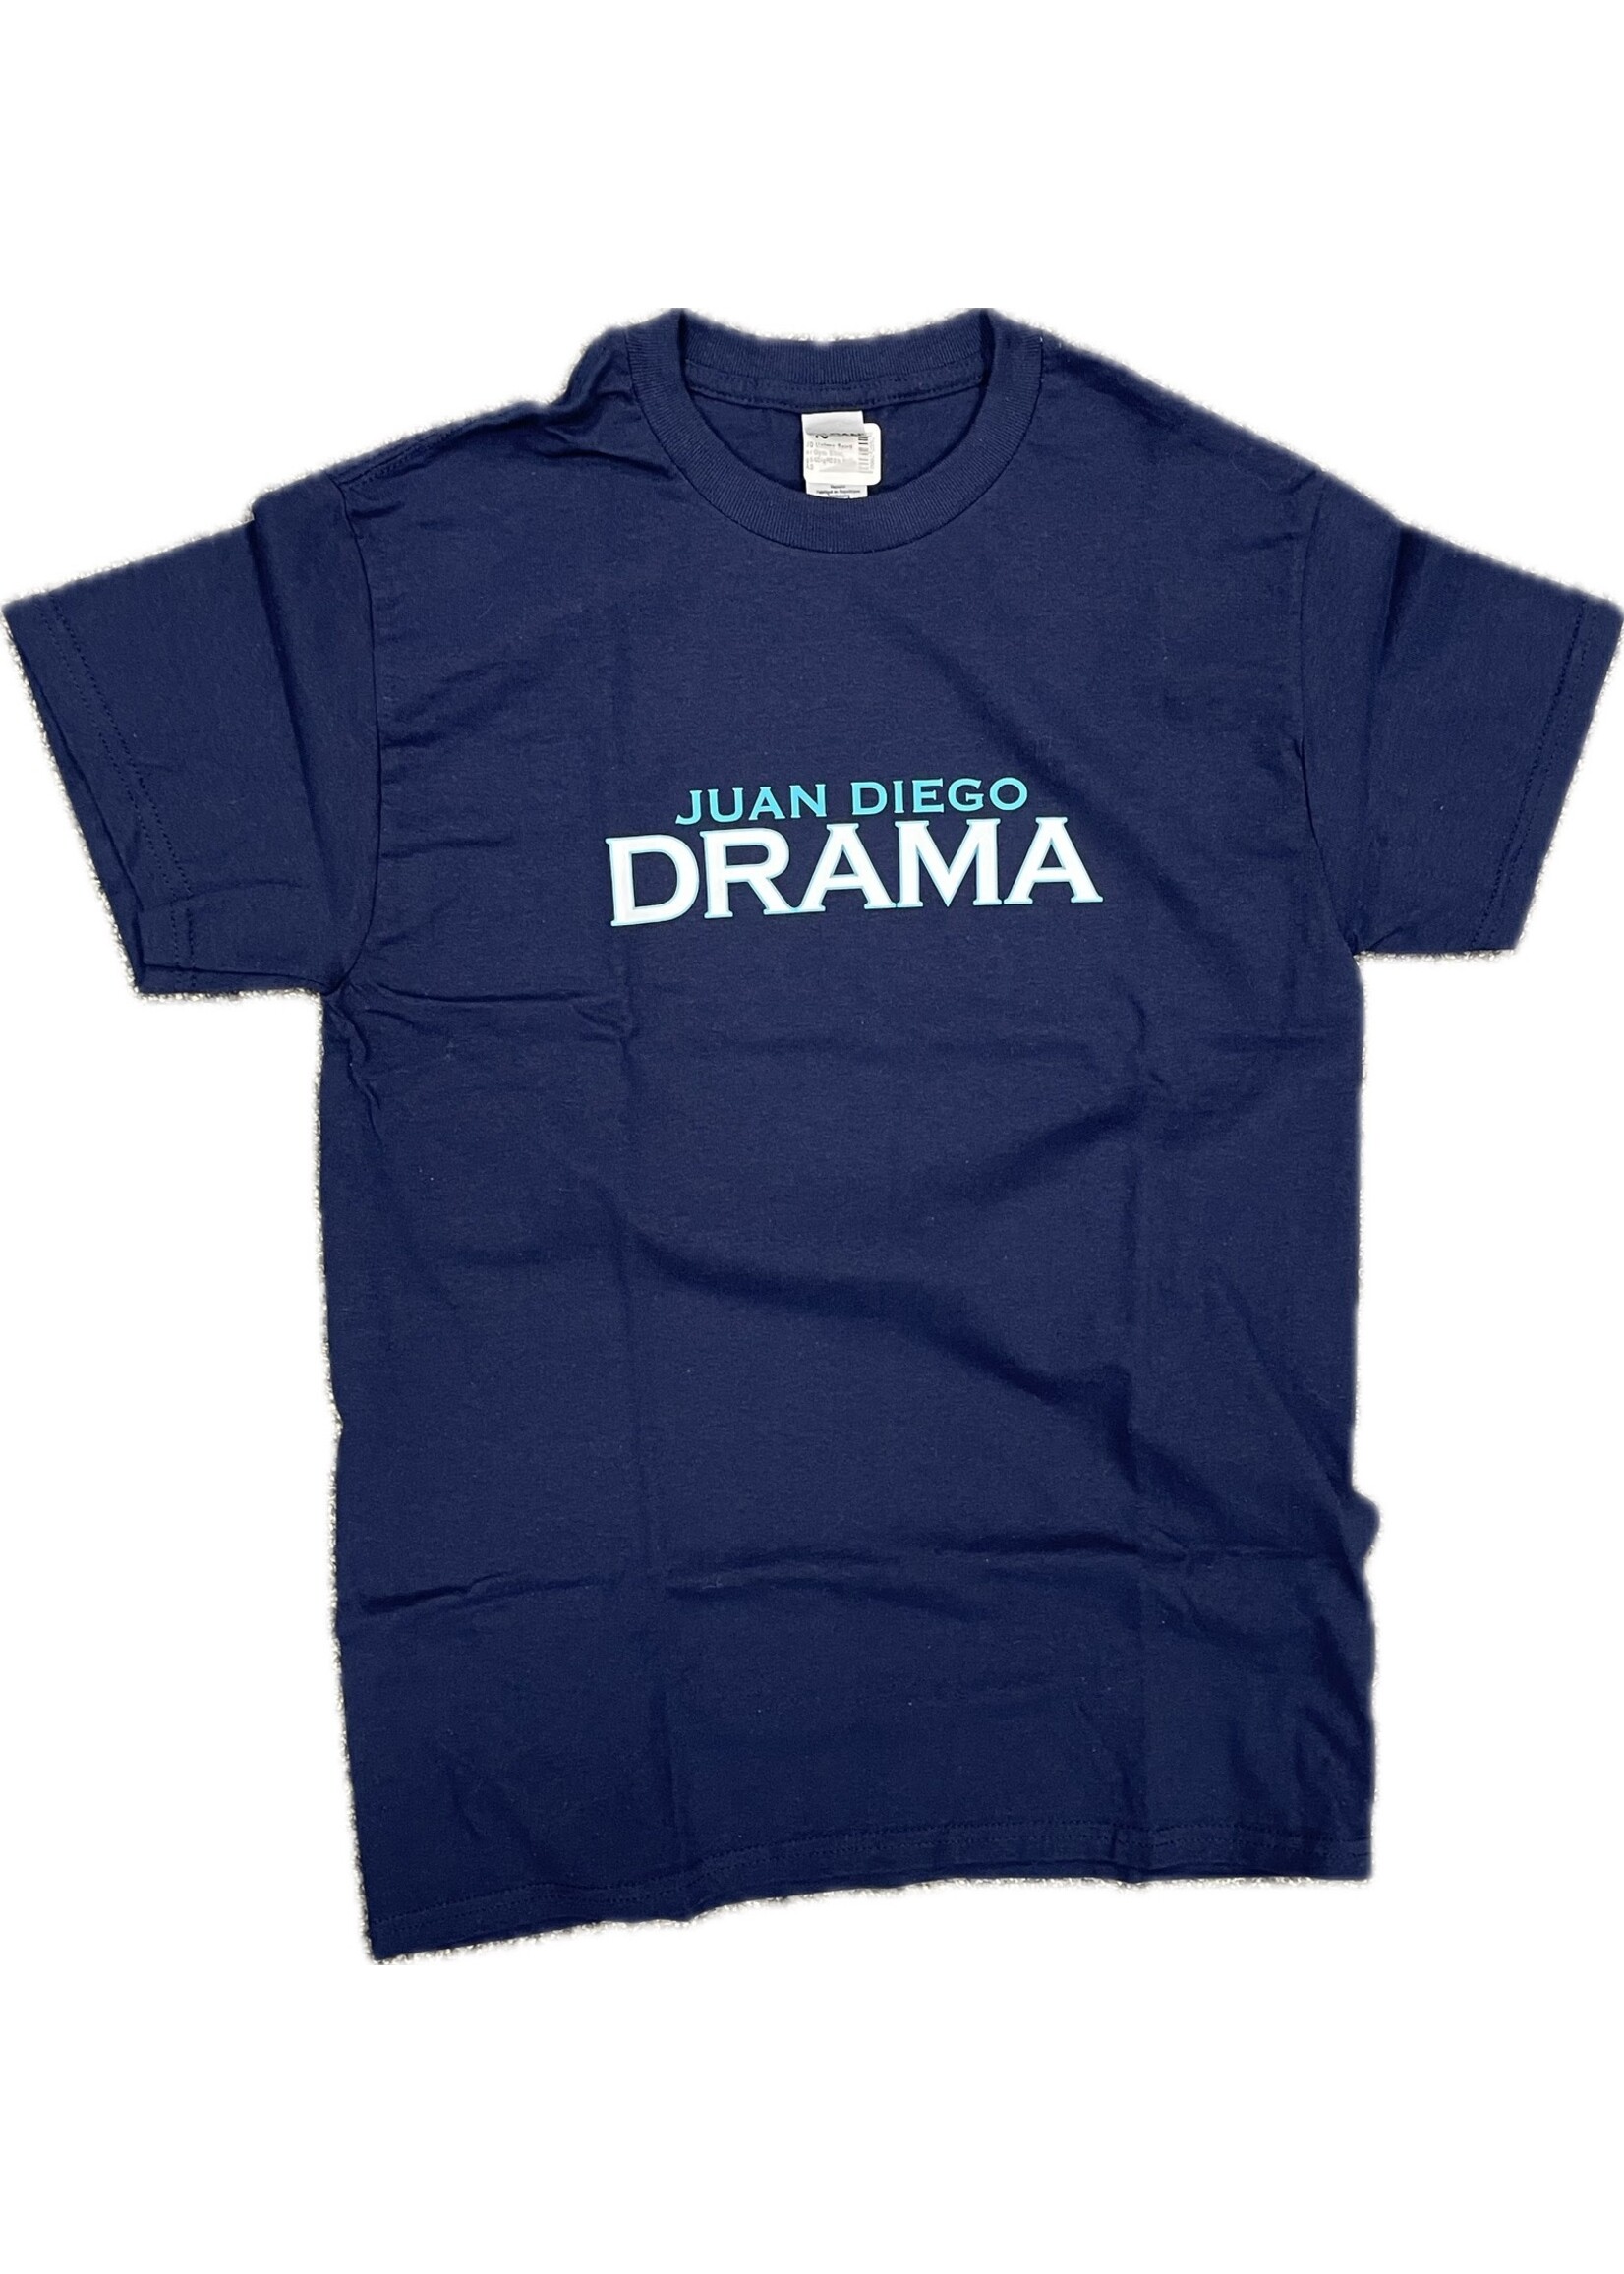 NON-UNIFORM Drama, Juan Diego Drama Unisex s/s t-shirt